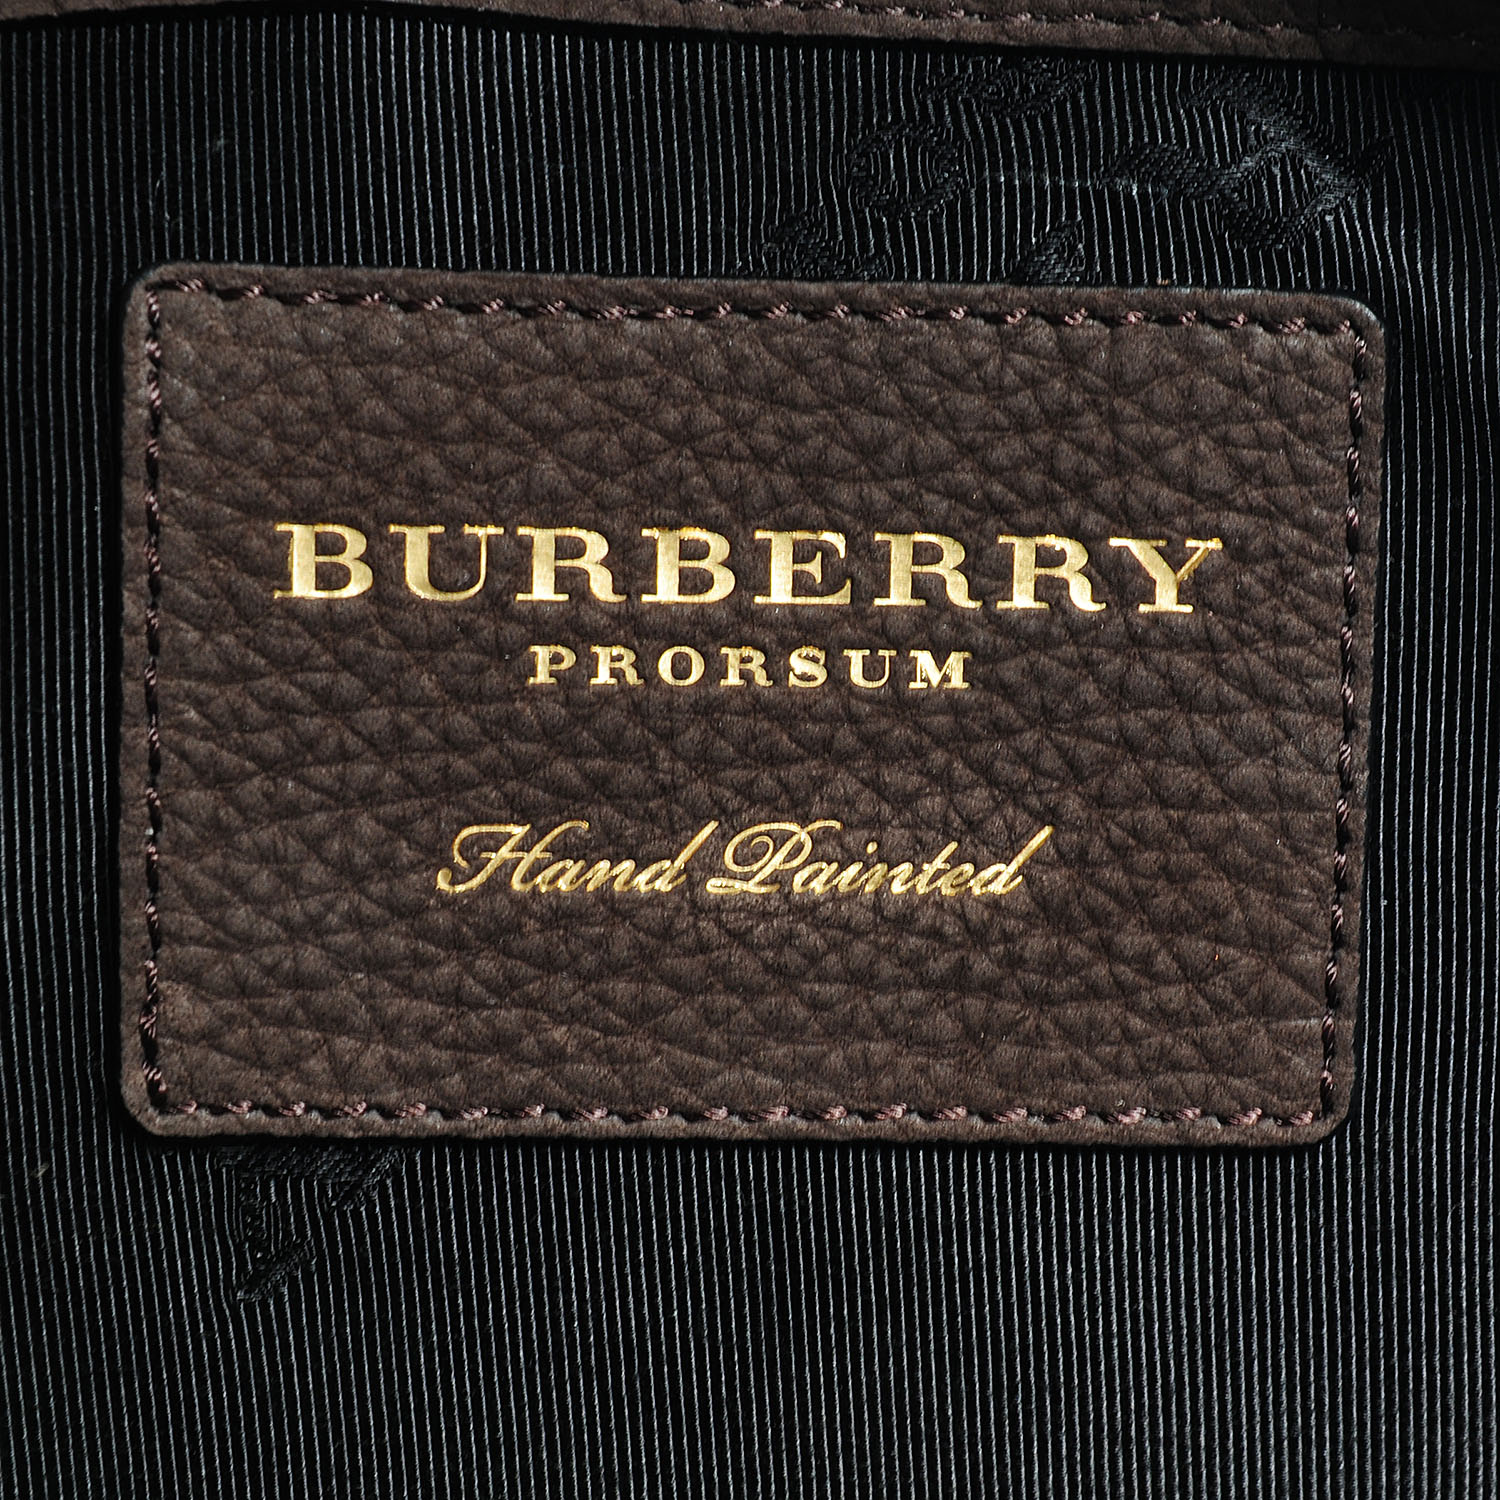 burberry prorsum label